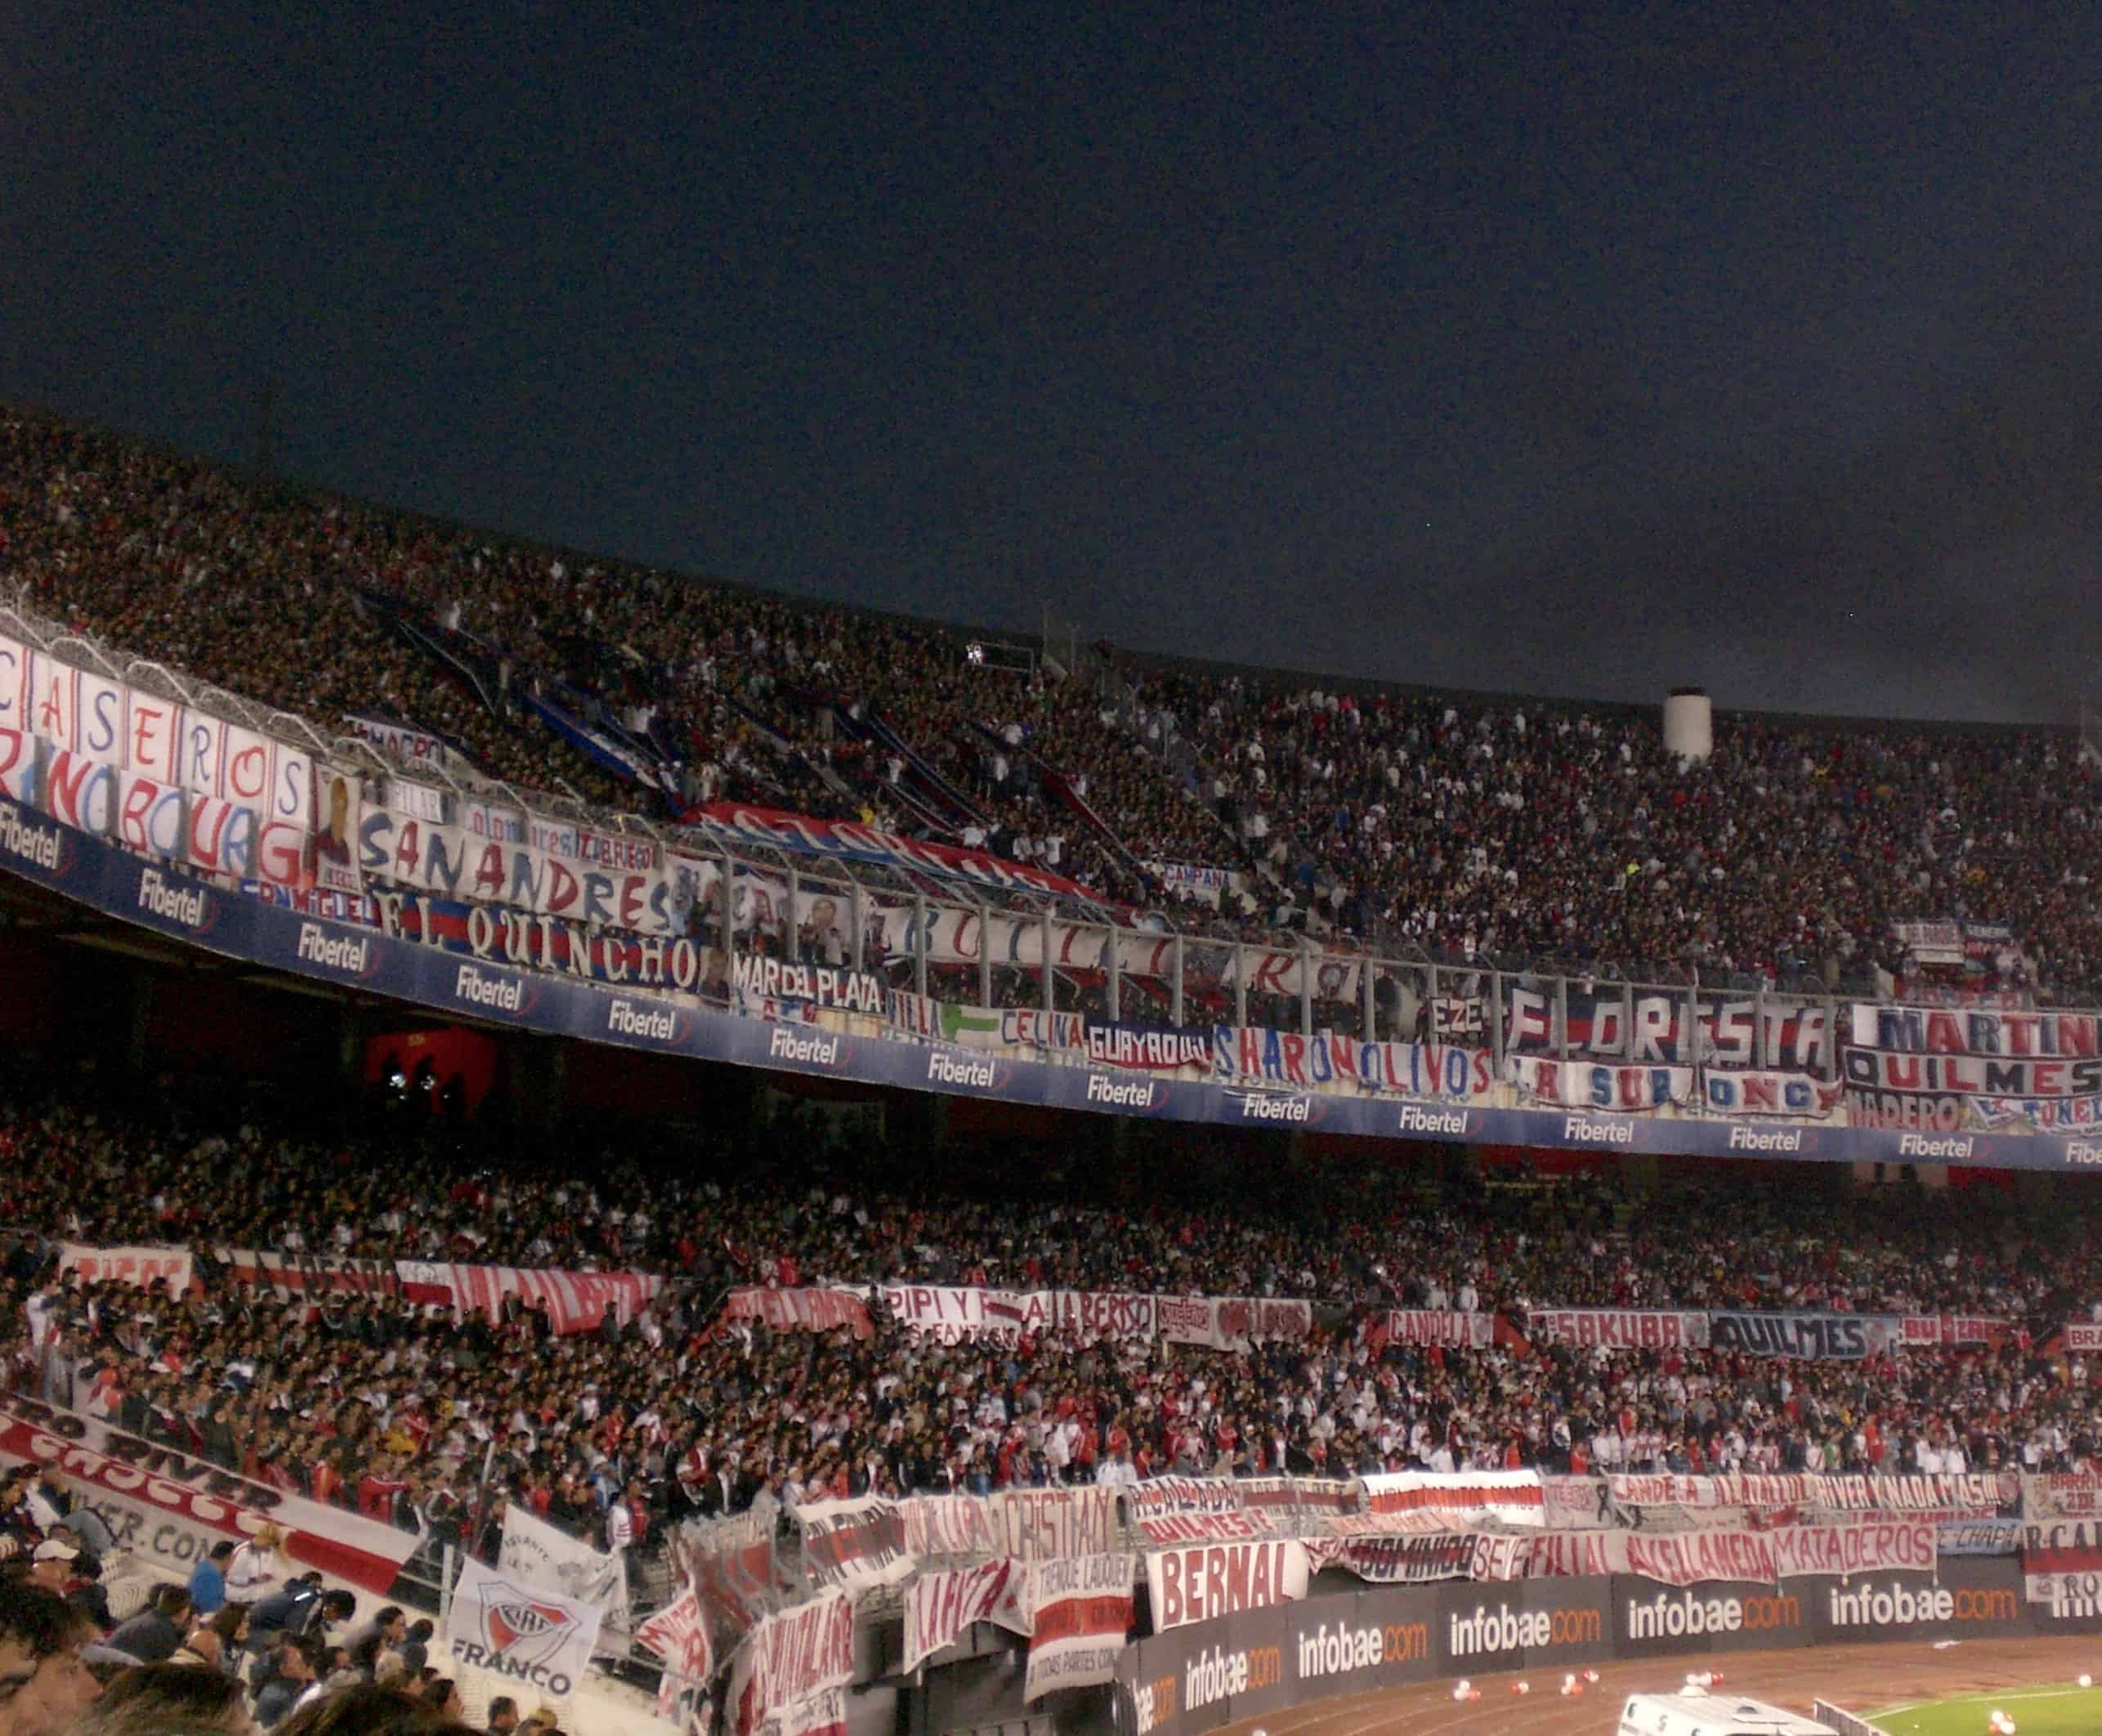 Great atmosphere at Estadio Monumental Antonio Vespucio Liberti.